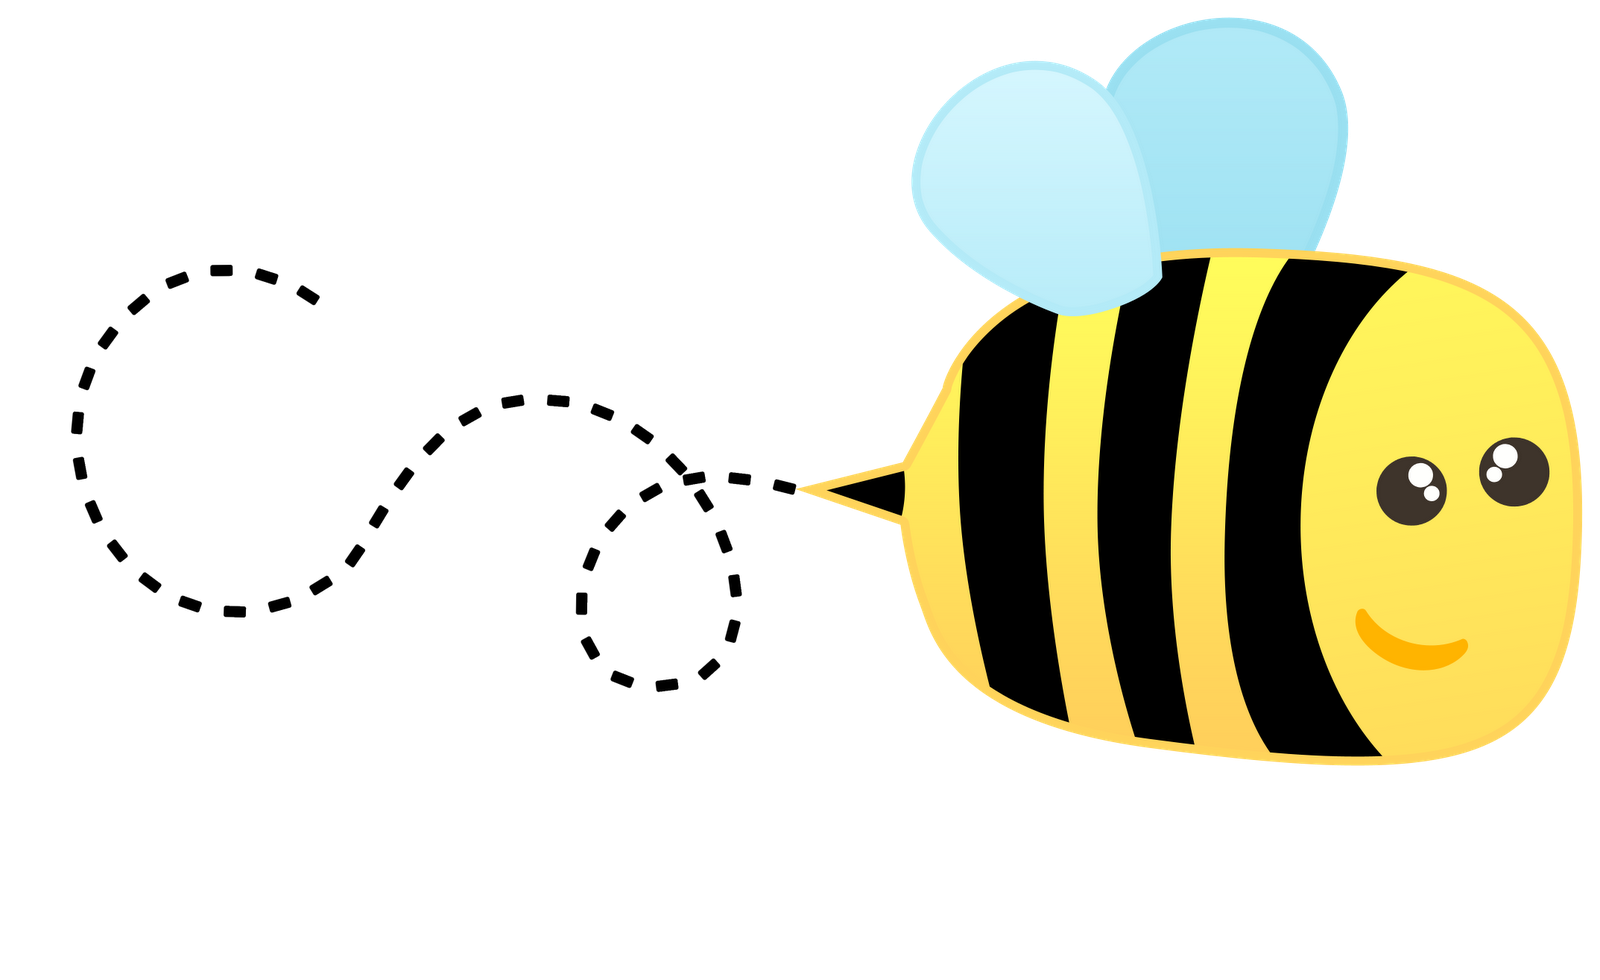 Free Bumble Bee Clip Art Pictures - Clipartix